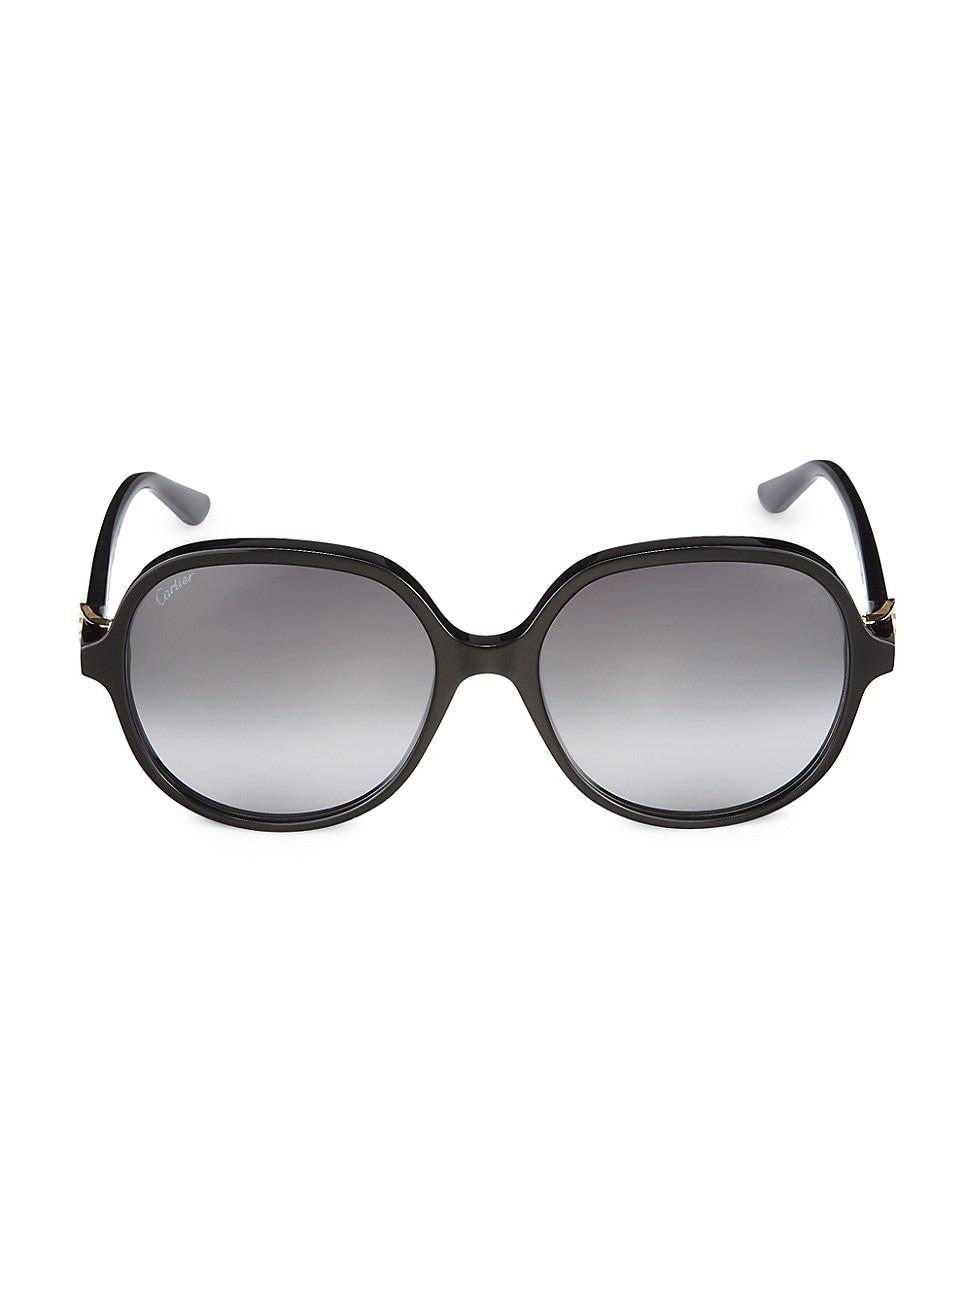 Chlo 57mm Rectangular Sunglasses Product Image